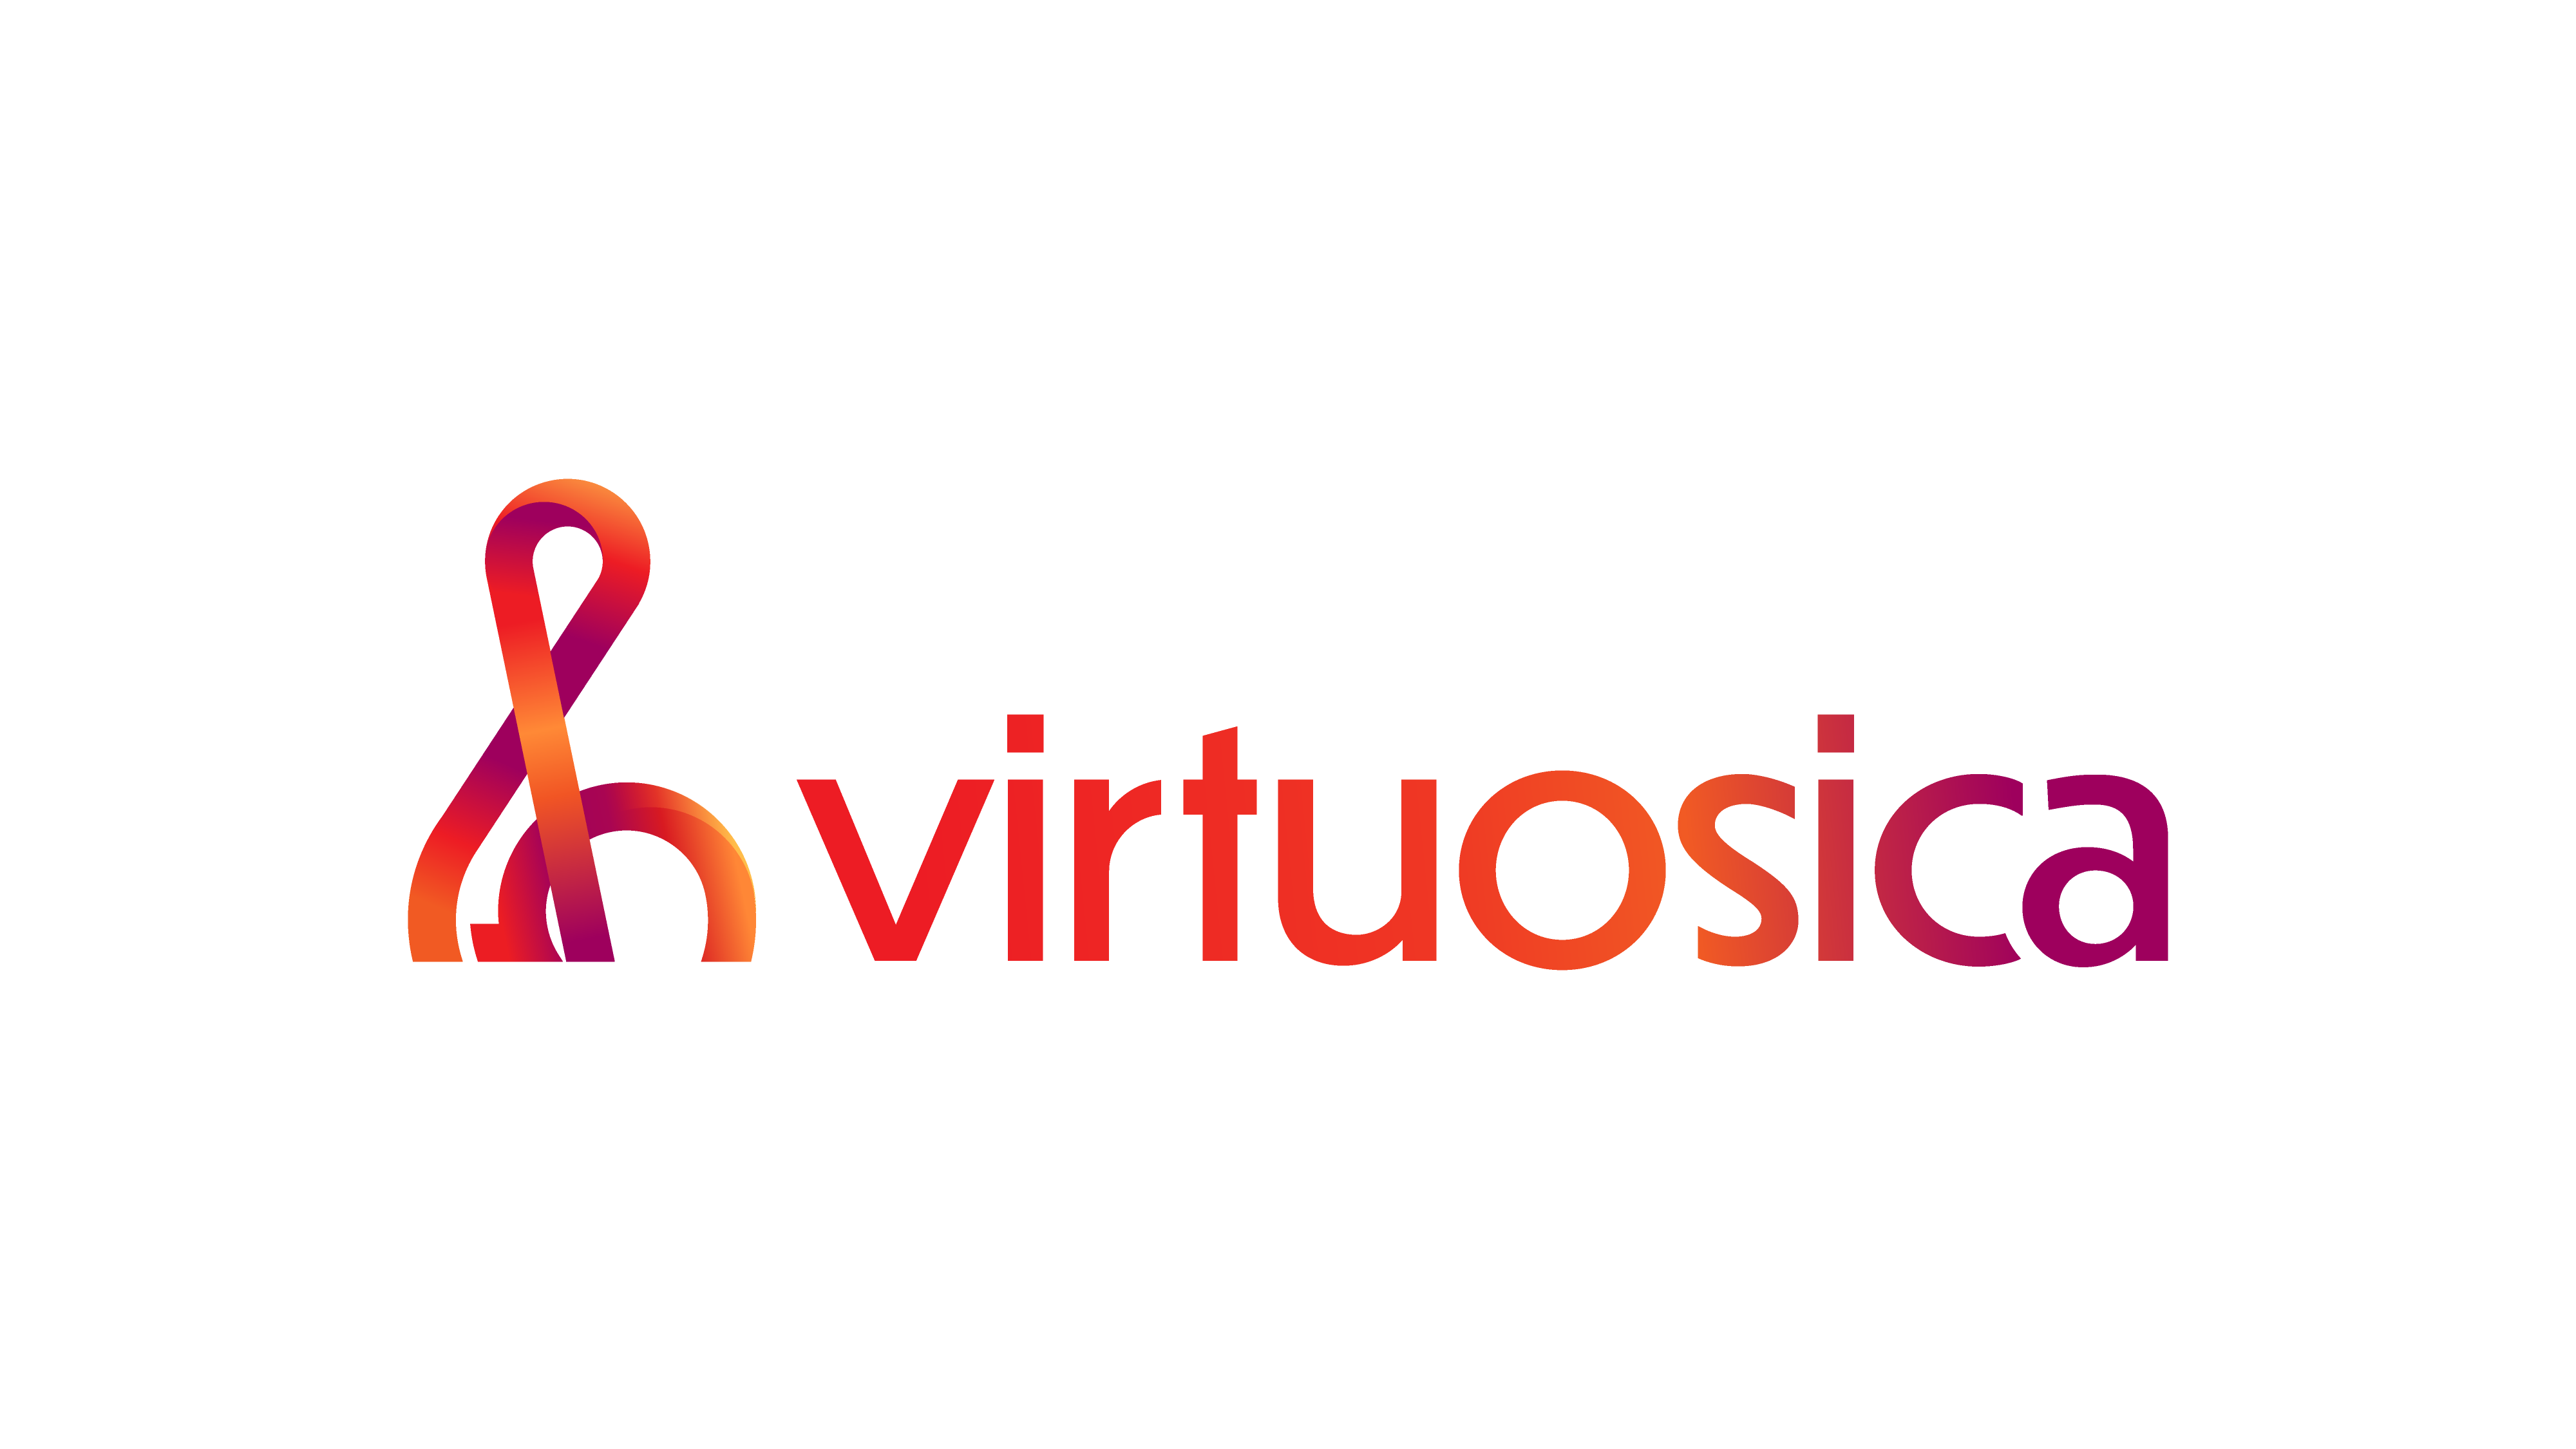 Virtuosica live music marketplace